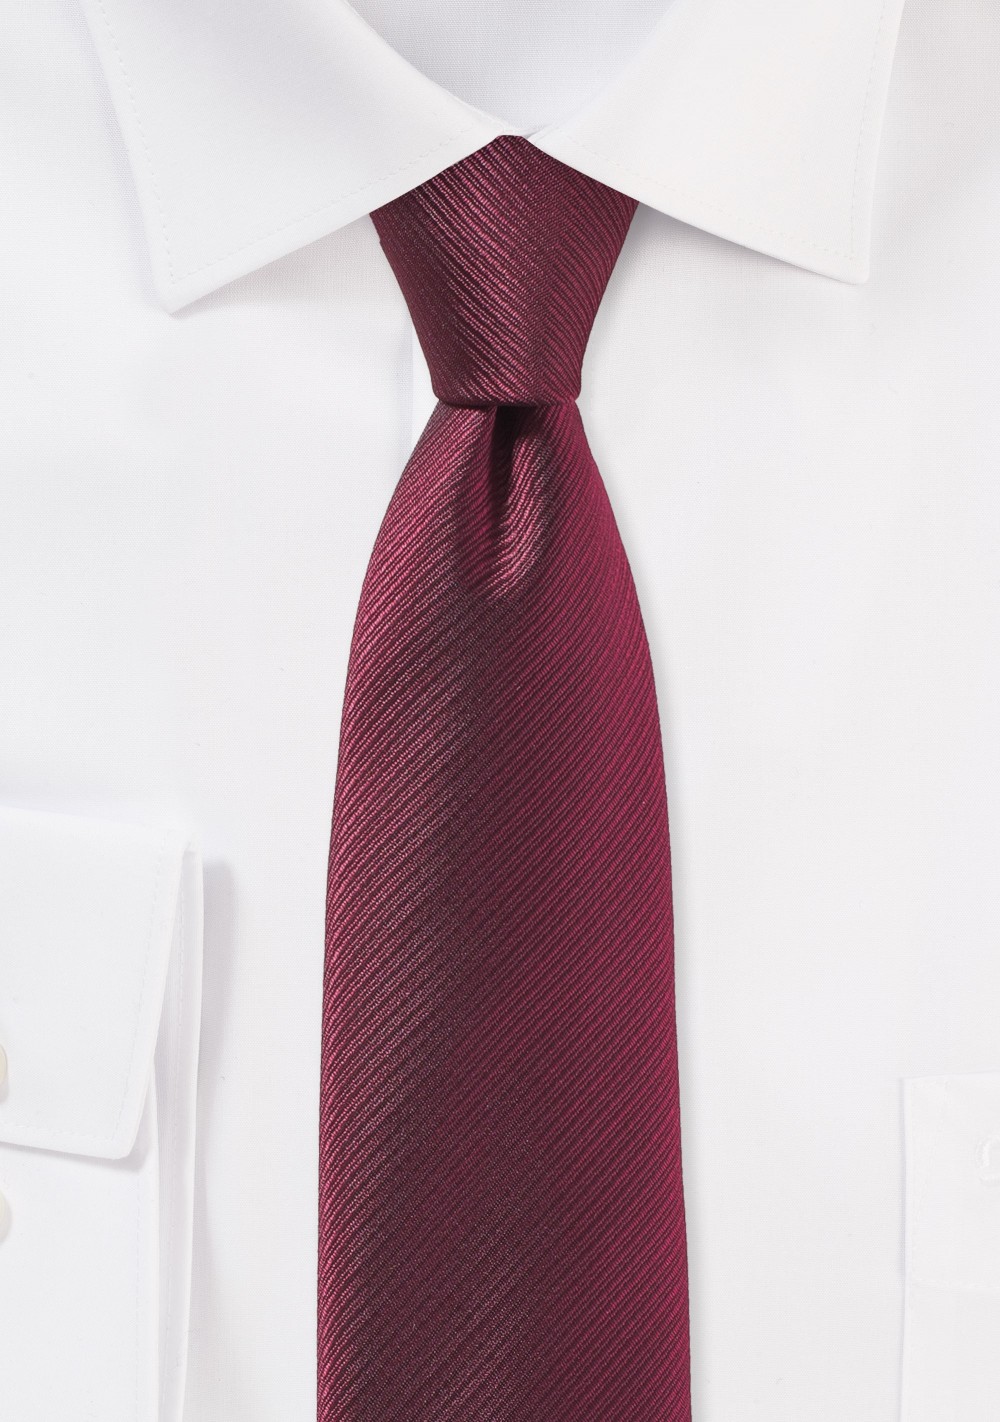 Burgundy Red Skinny Tie with Stripe Texture